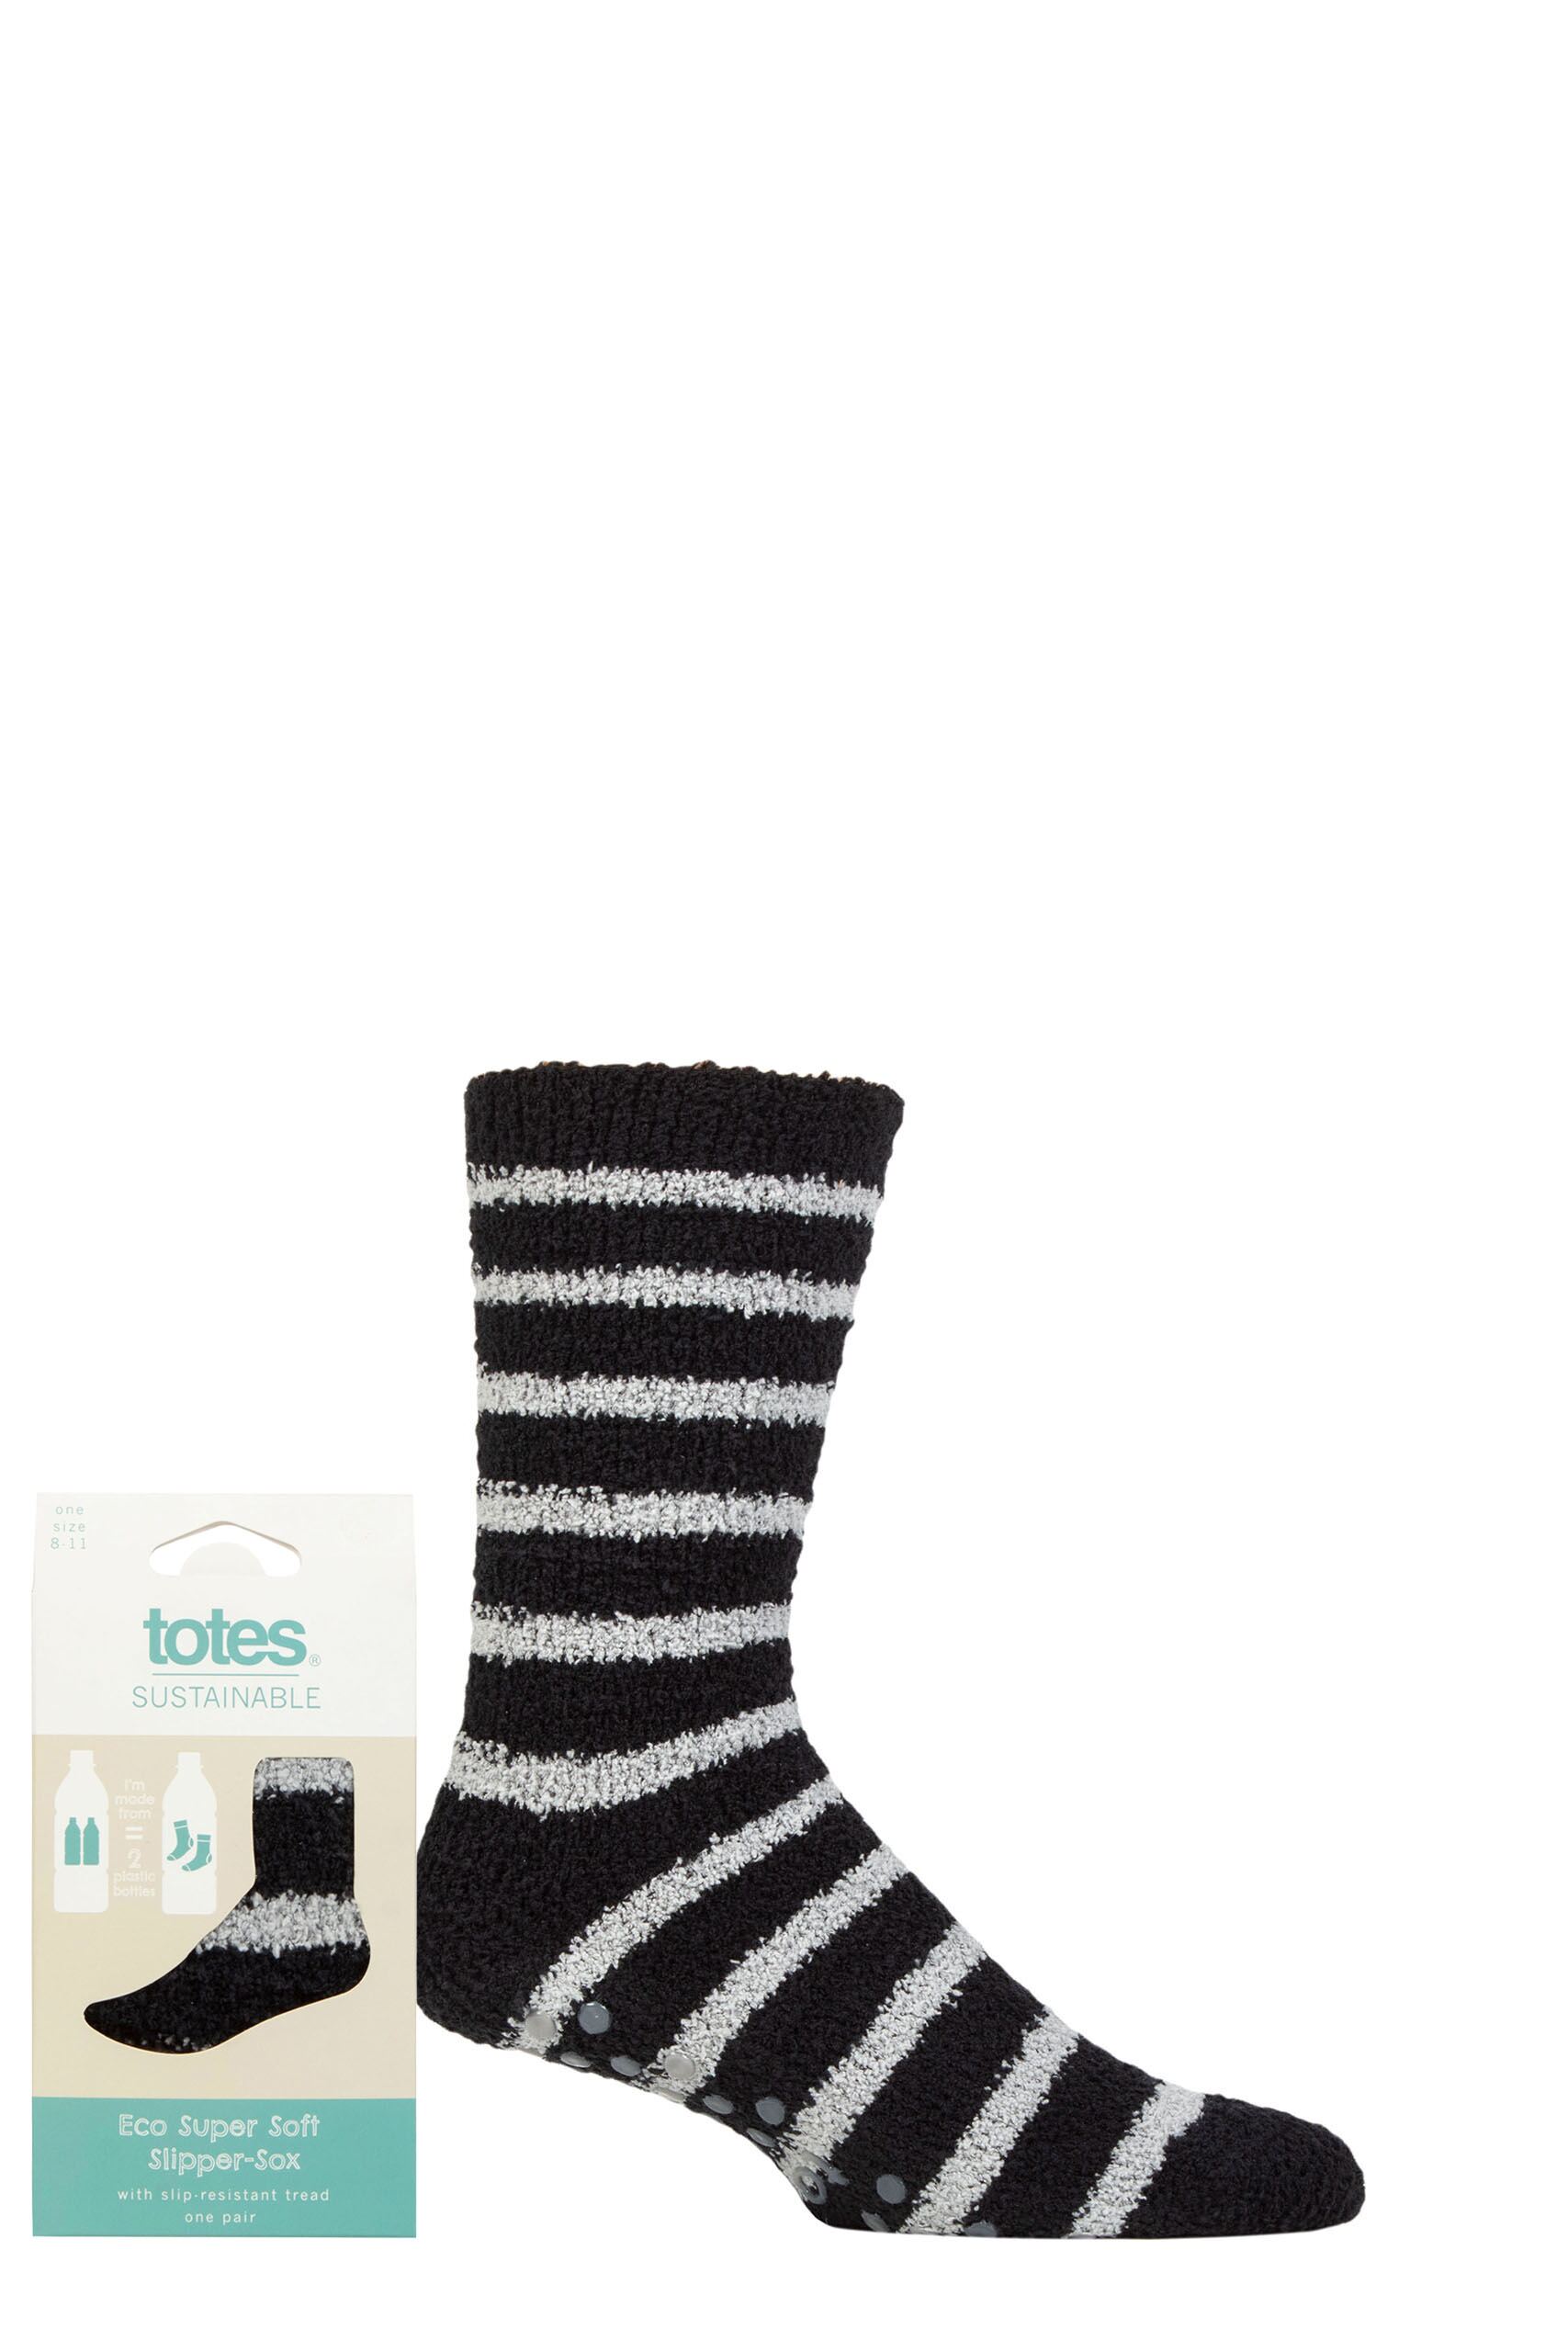 Mens 1 Pair Totes Super Soft Eco Slipper Socks Black 8-11 Mens